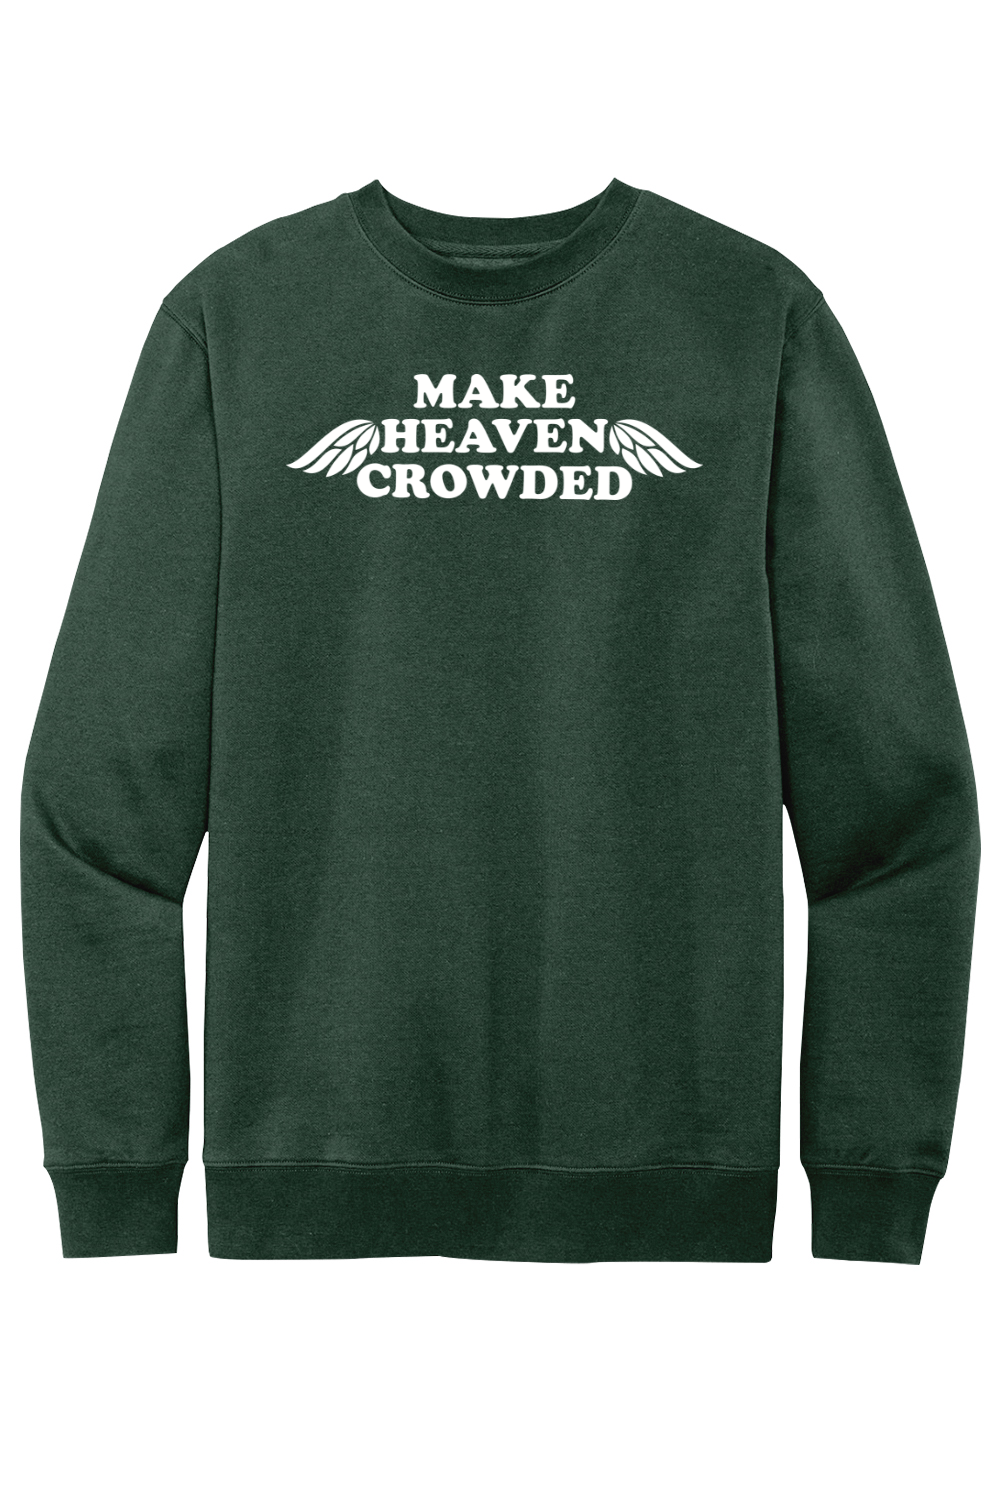 Make Heaven Crowded - Crewneck Sweatshirt